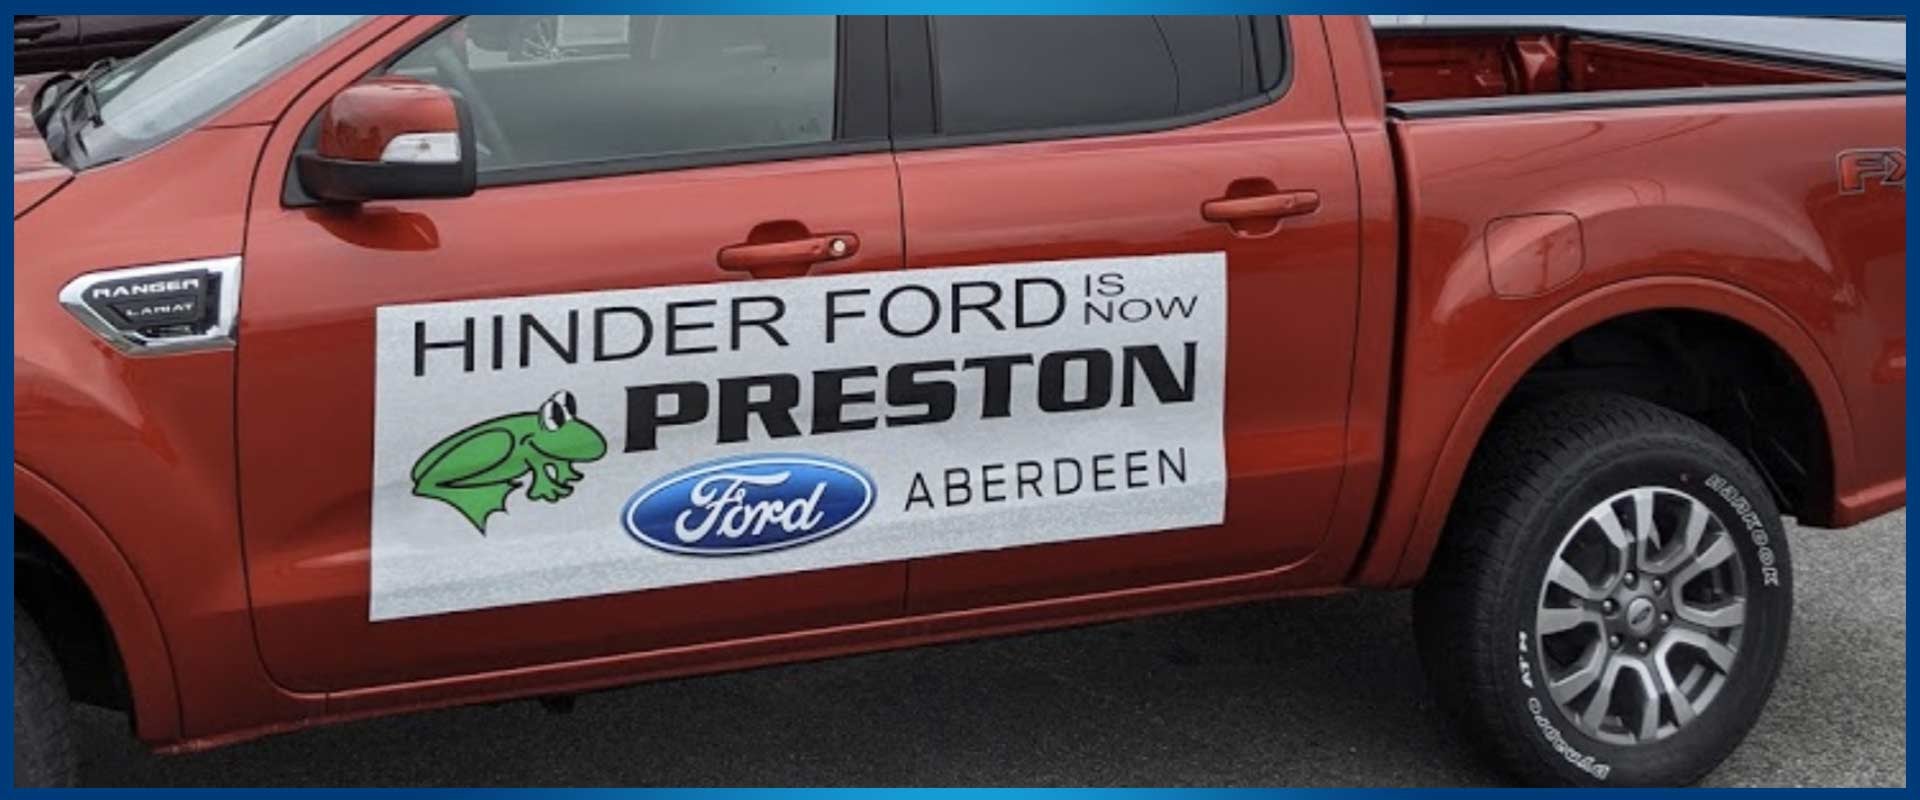 Ford dealership Aberdeen MD